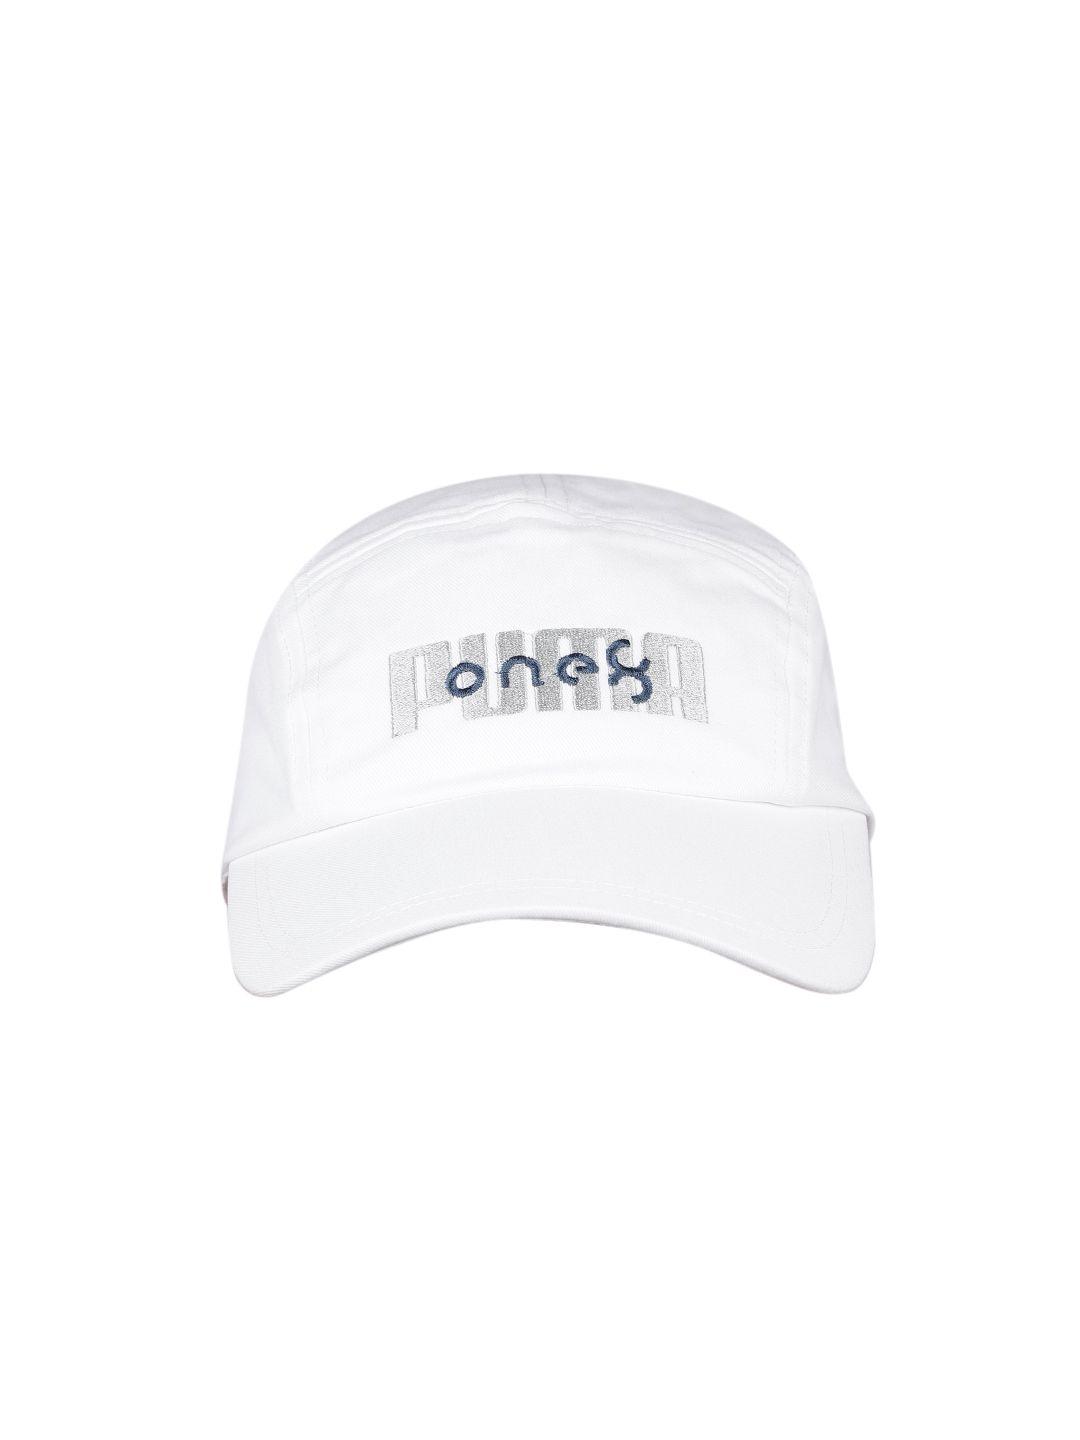 one8 x puma unisex white brand logo embroidered snapback cap